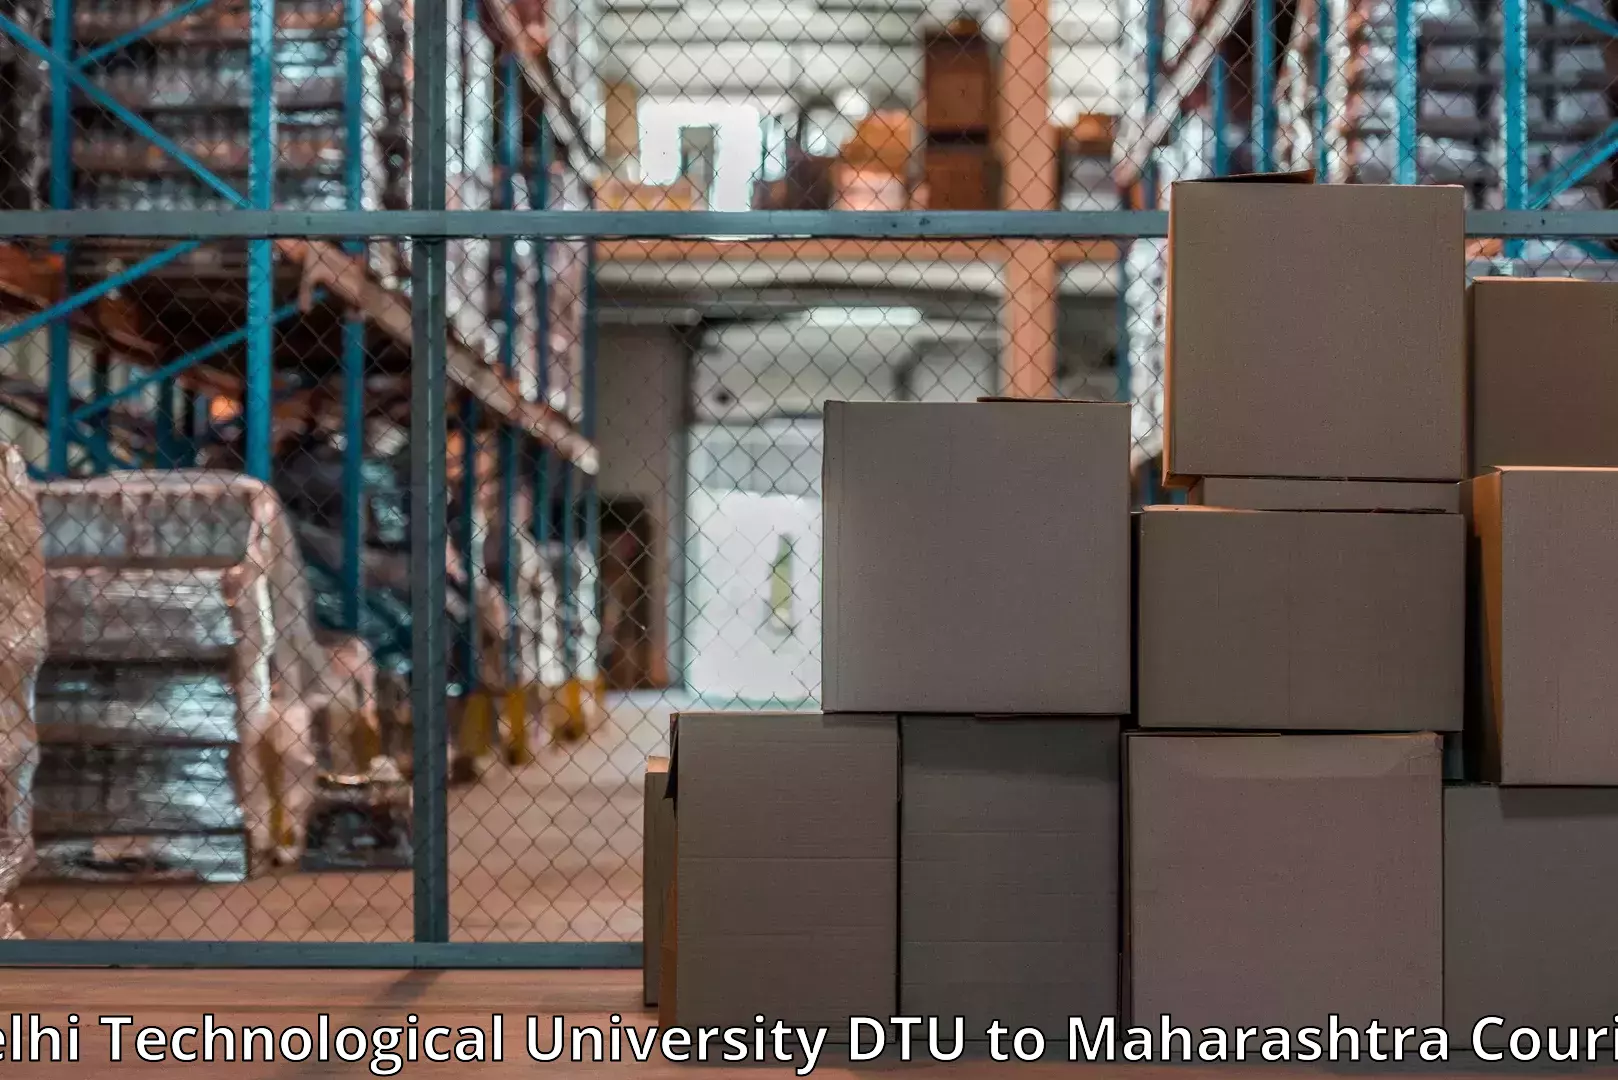 Furniture moving solutions Delhi Technological University DTU to Lonar